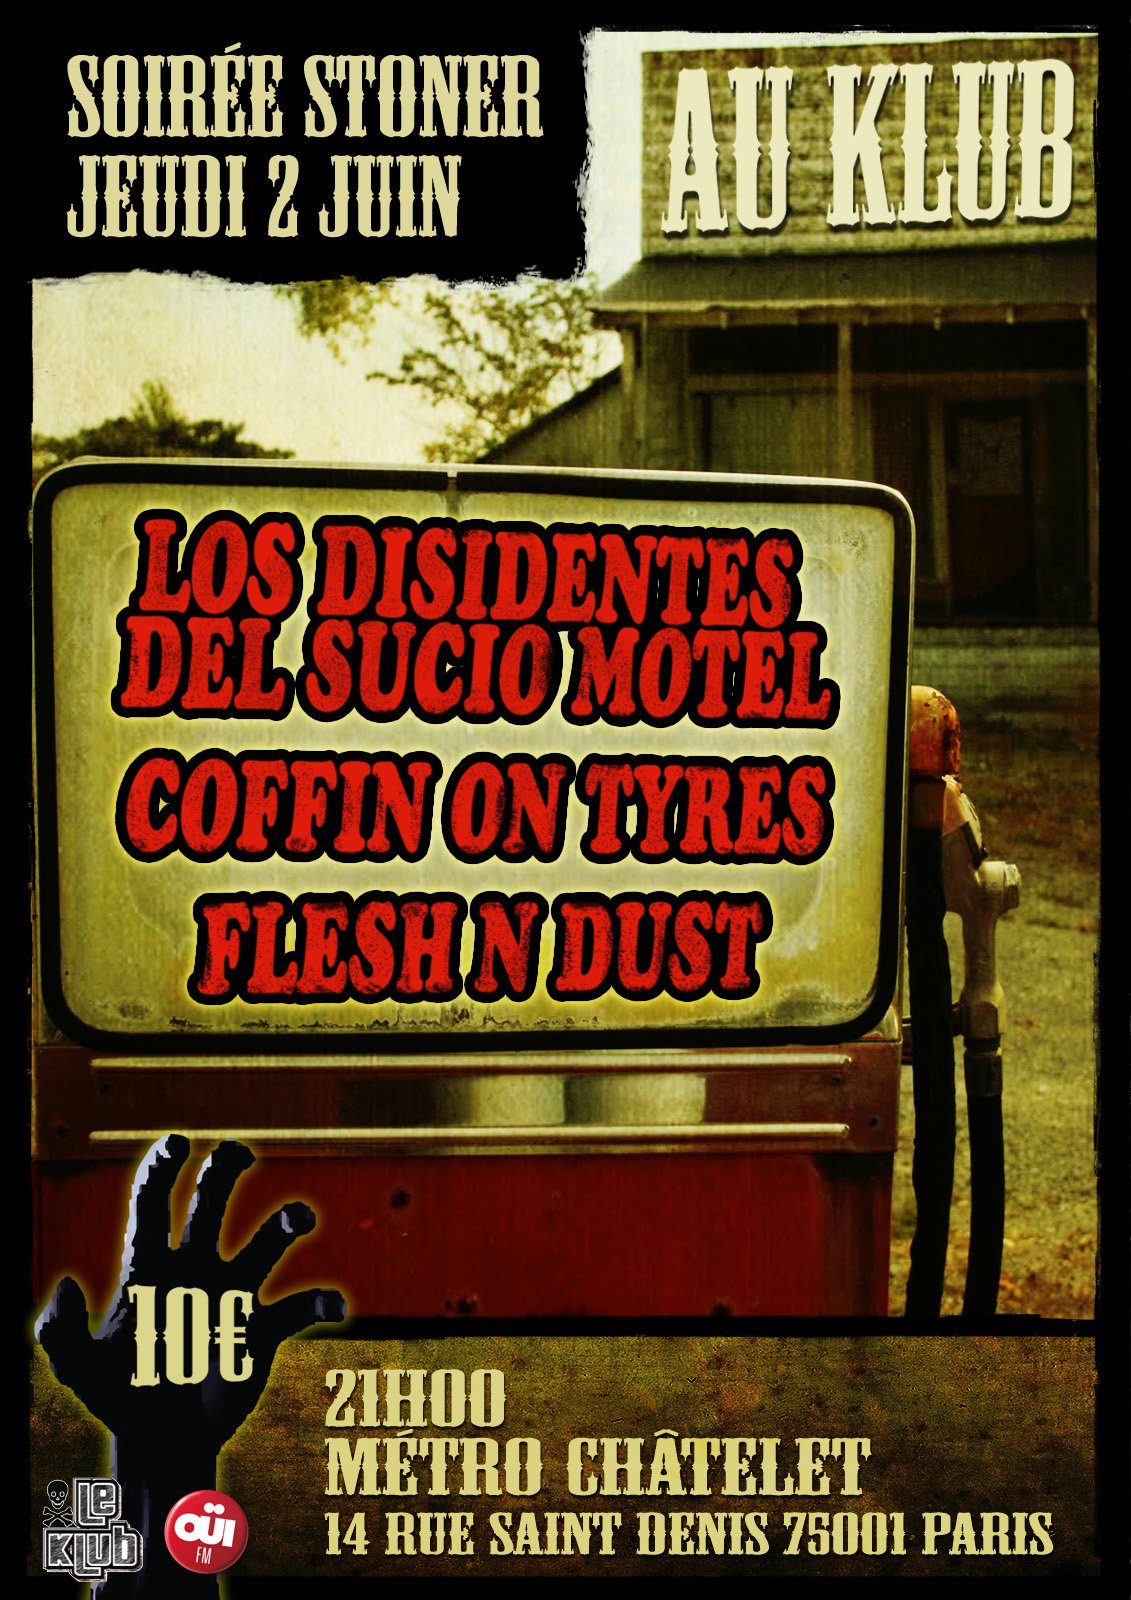 Coffin On Tyres + Los Disidentes Del Sucio Motel + Flesh & Dust @ Klub (Paris), le 02 Juin 2011